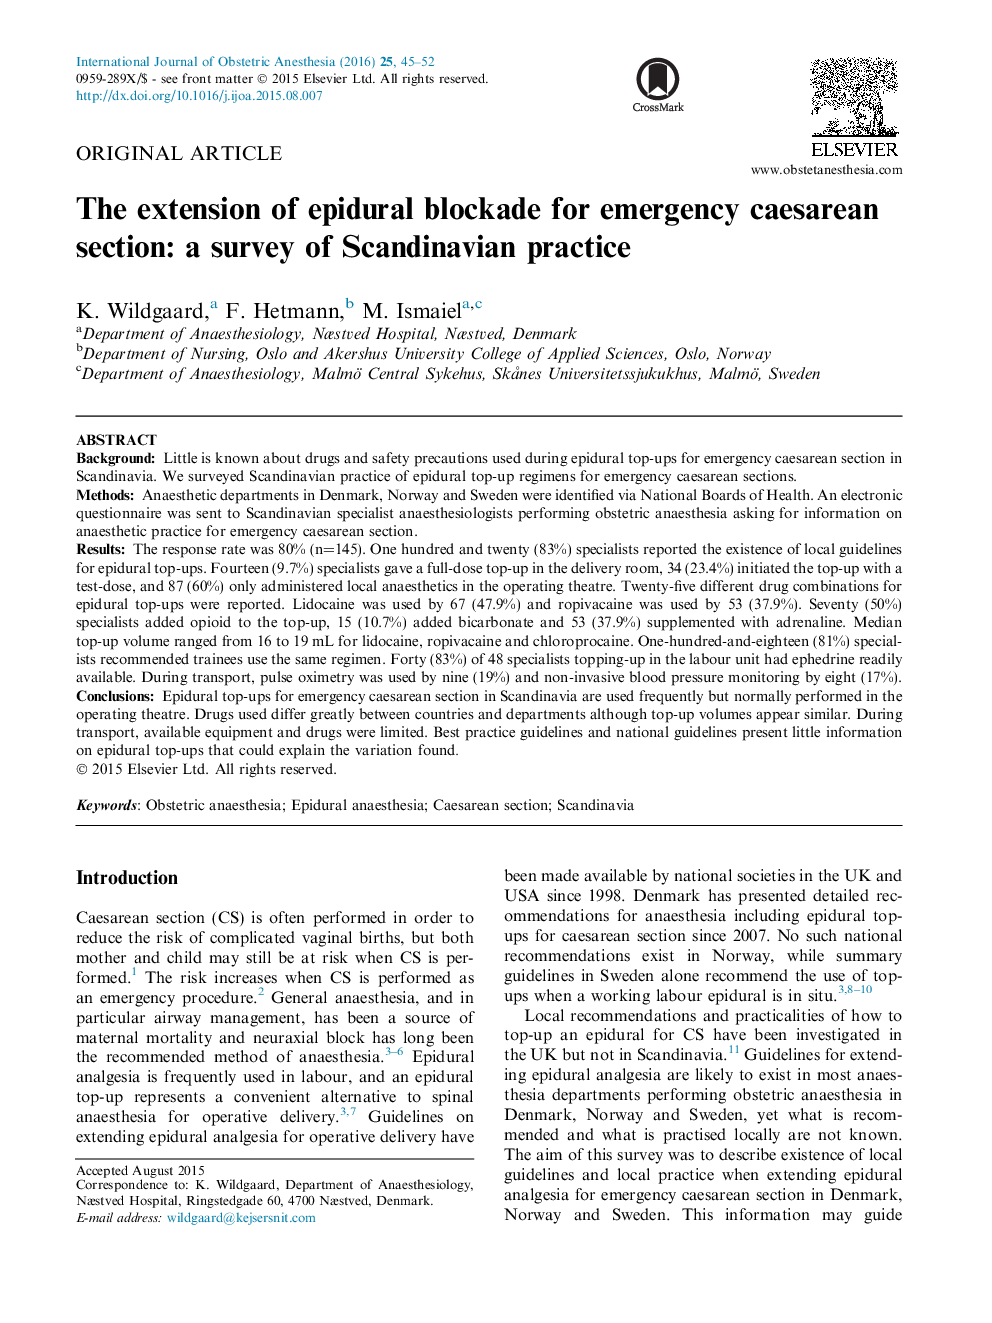 The extension of epidural blockade for emergency caesarean section: a survey of Scandinavian practice